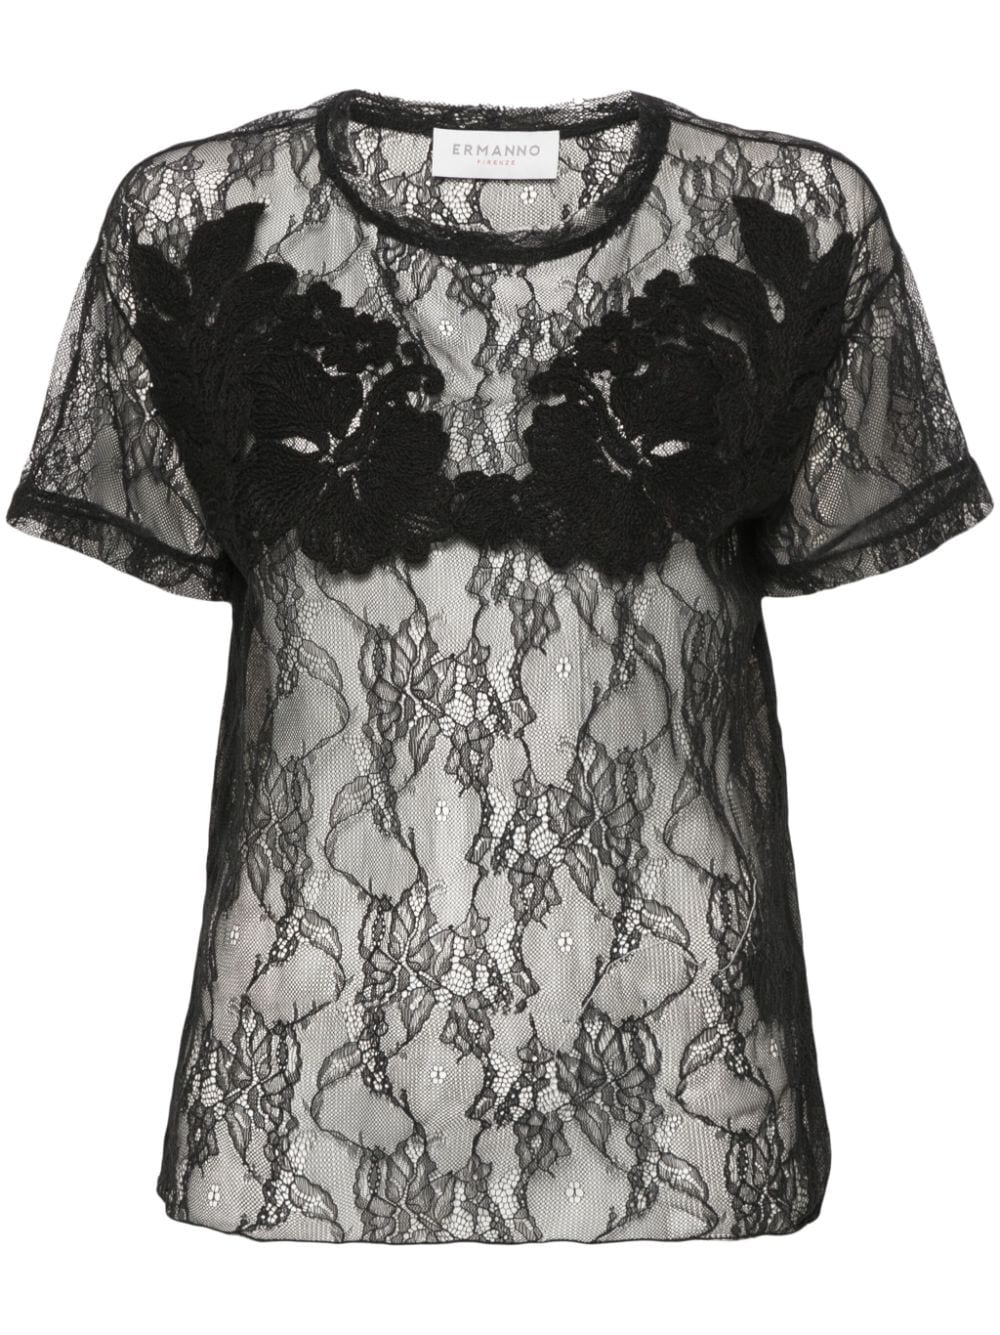 ERMANNO FIRENZE floral-embroidery lace blouse - Black von ERMANNO FIRENZE